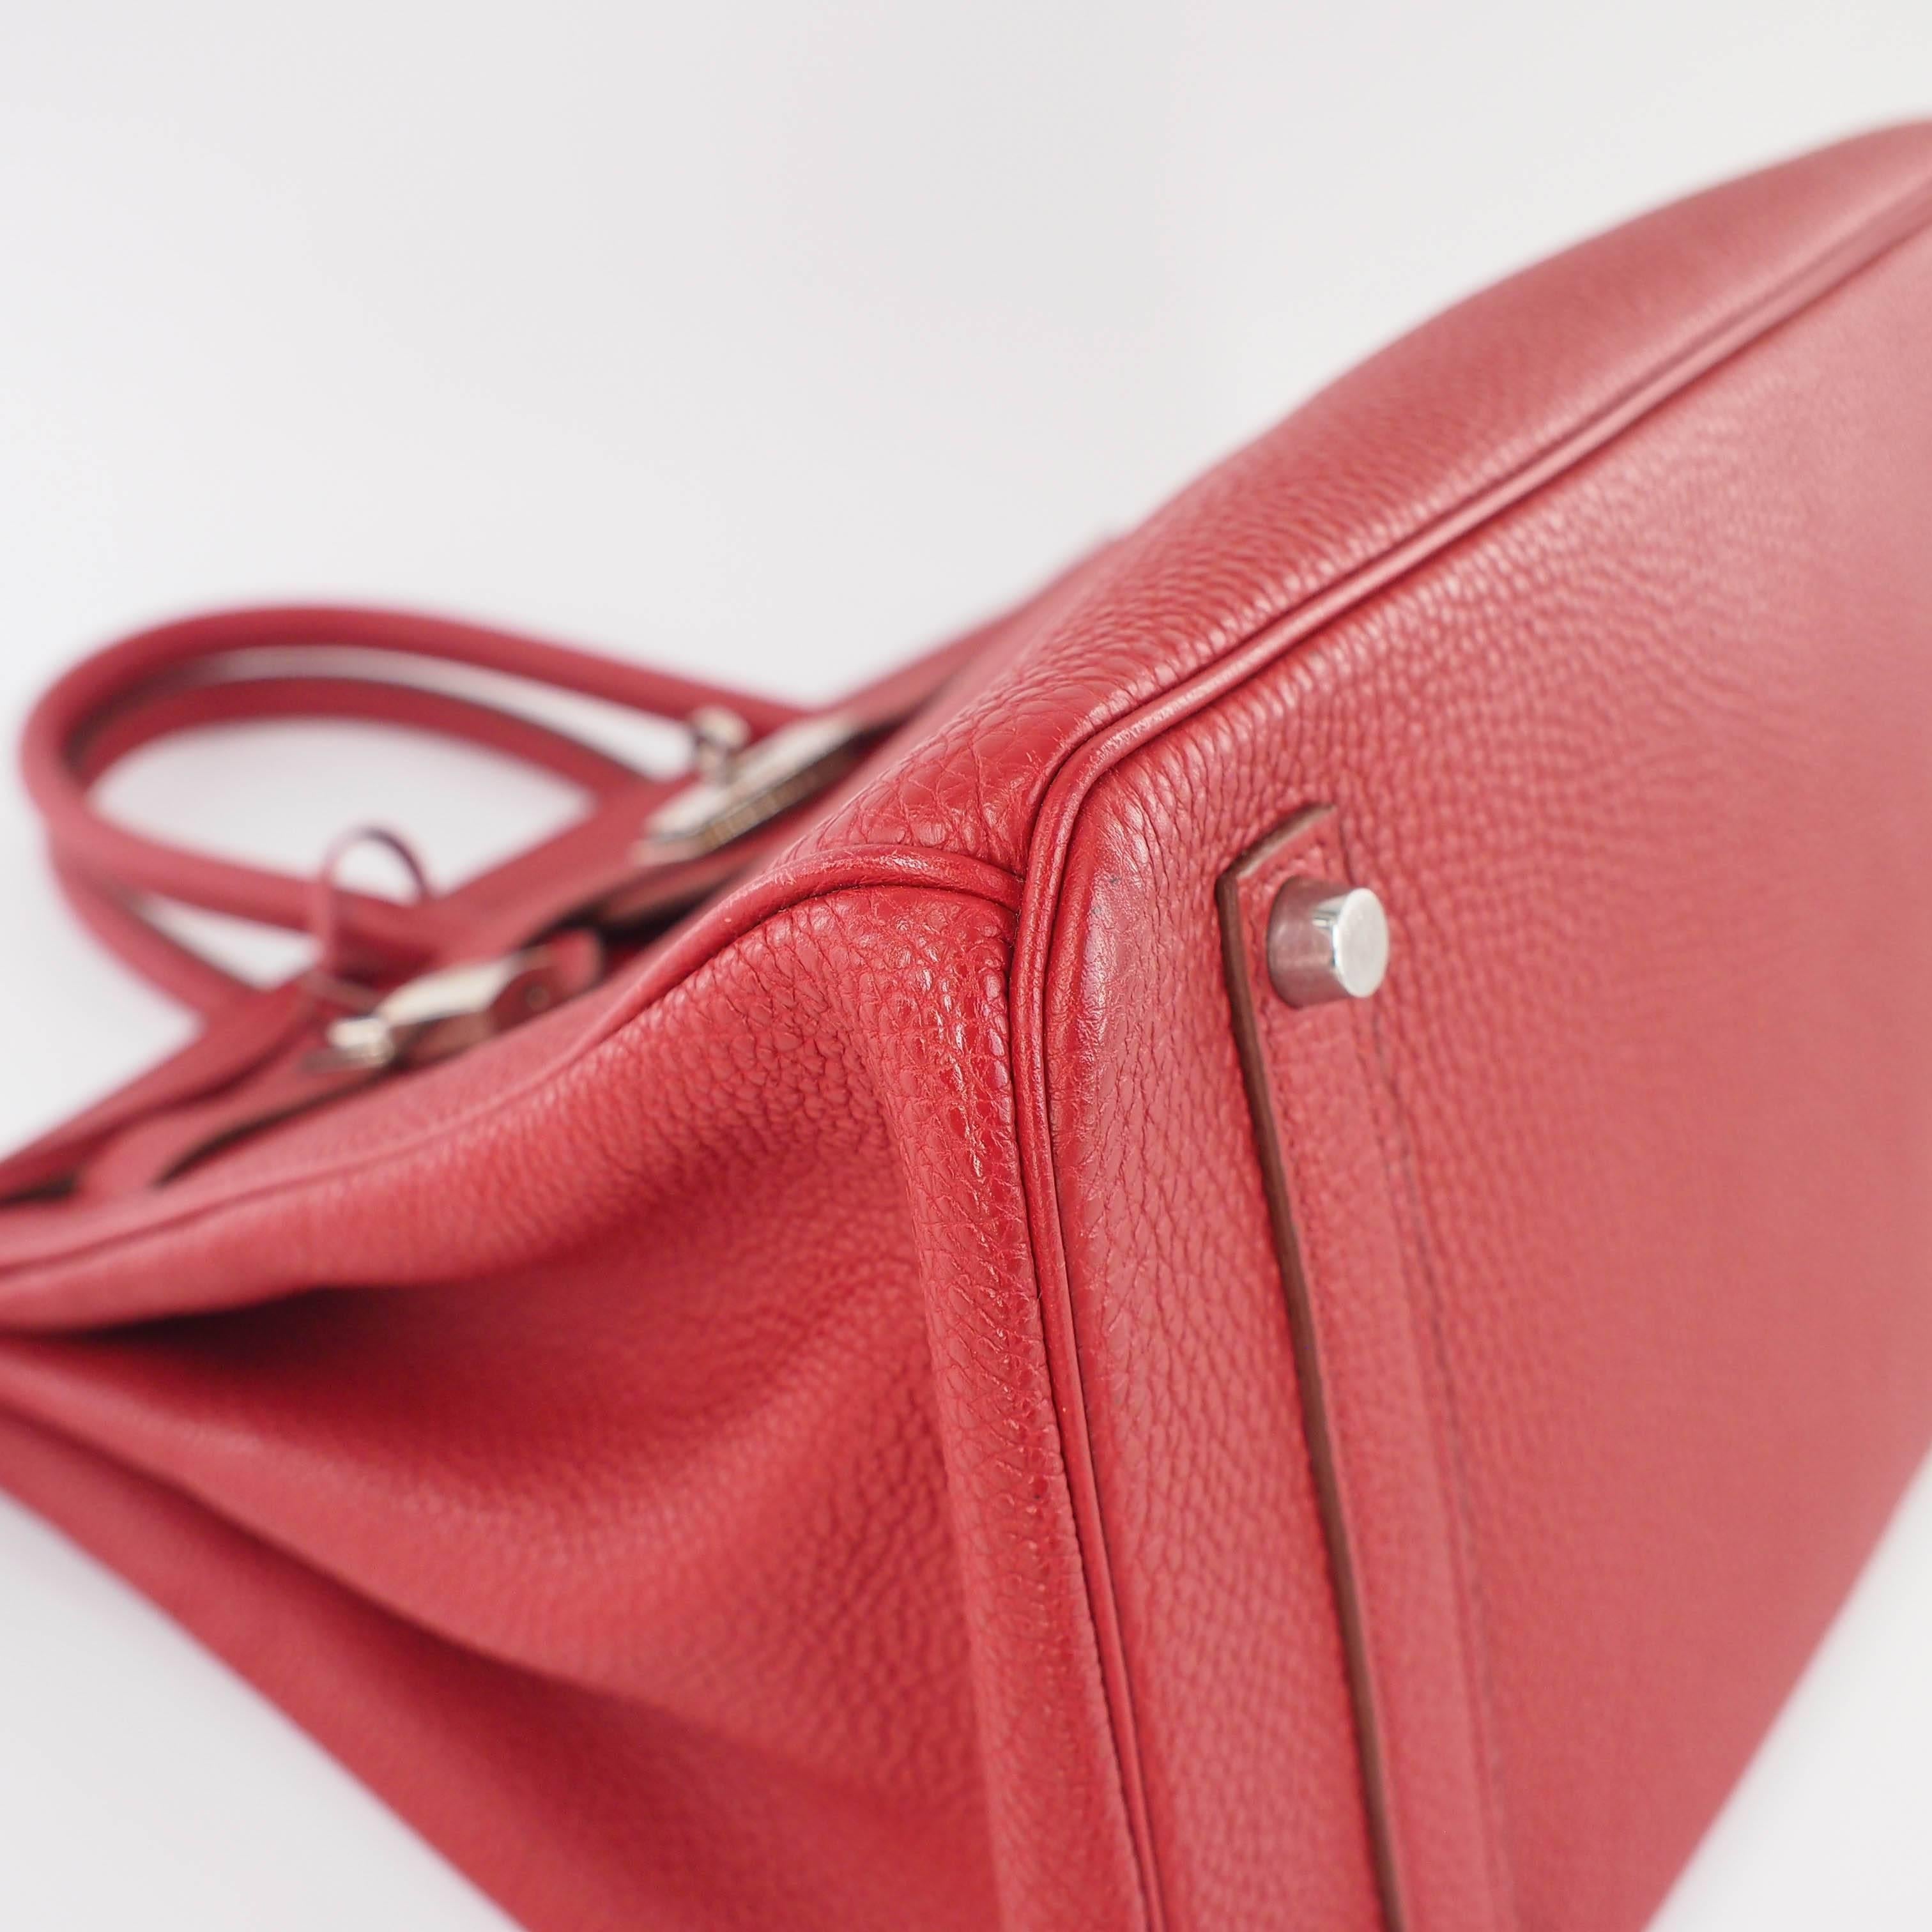 Hermes Birkin Handbag size 35 in Rouge Grenade With Palladium Hardware (PHW) 7